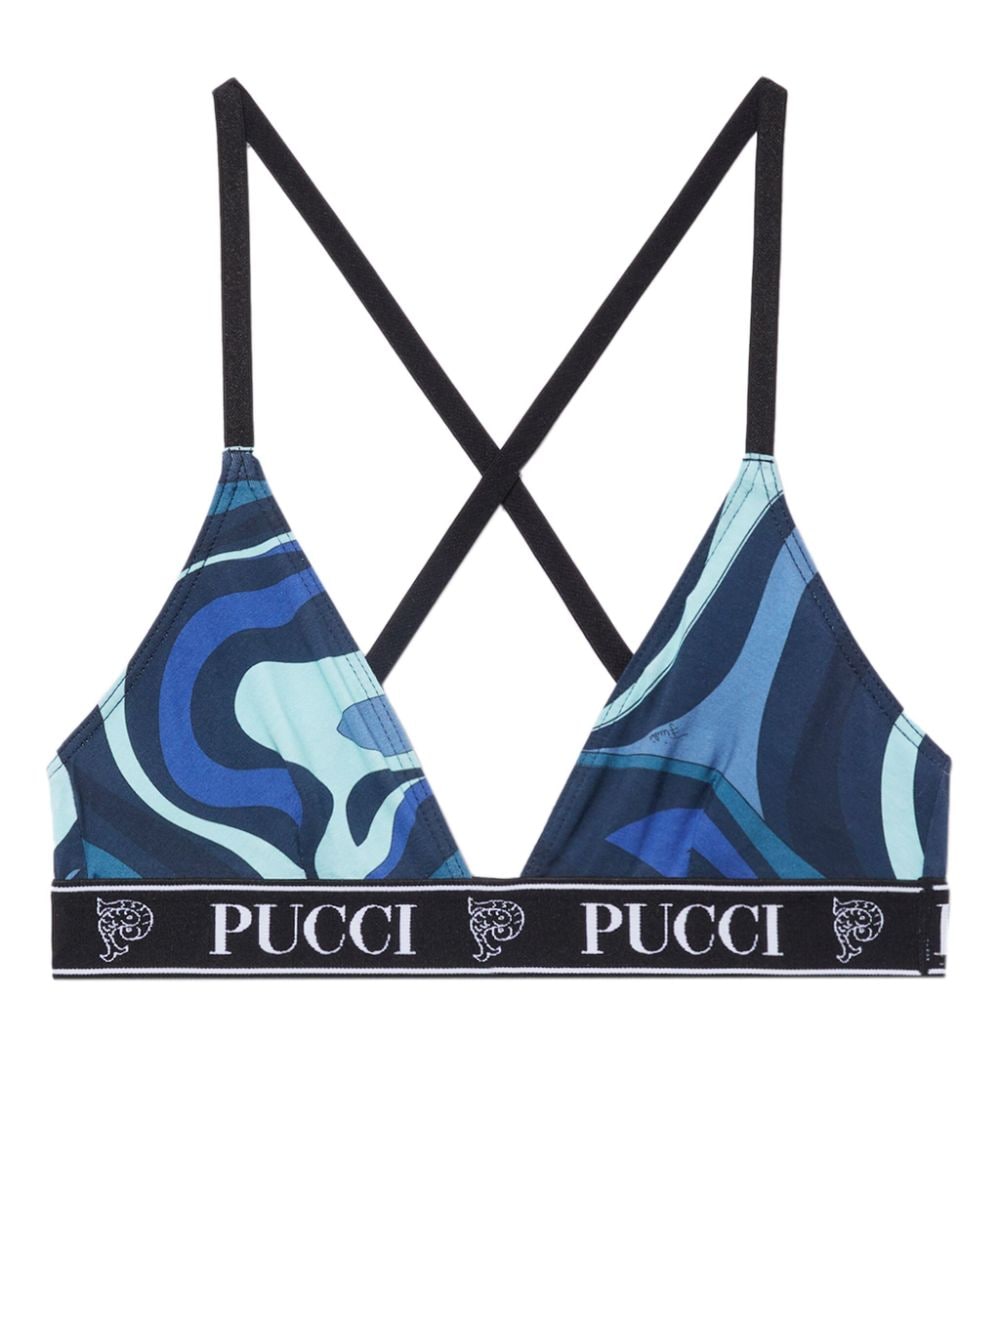 PUCCI logo-print cotton bra (set of three) - Blue von PUCCI